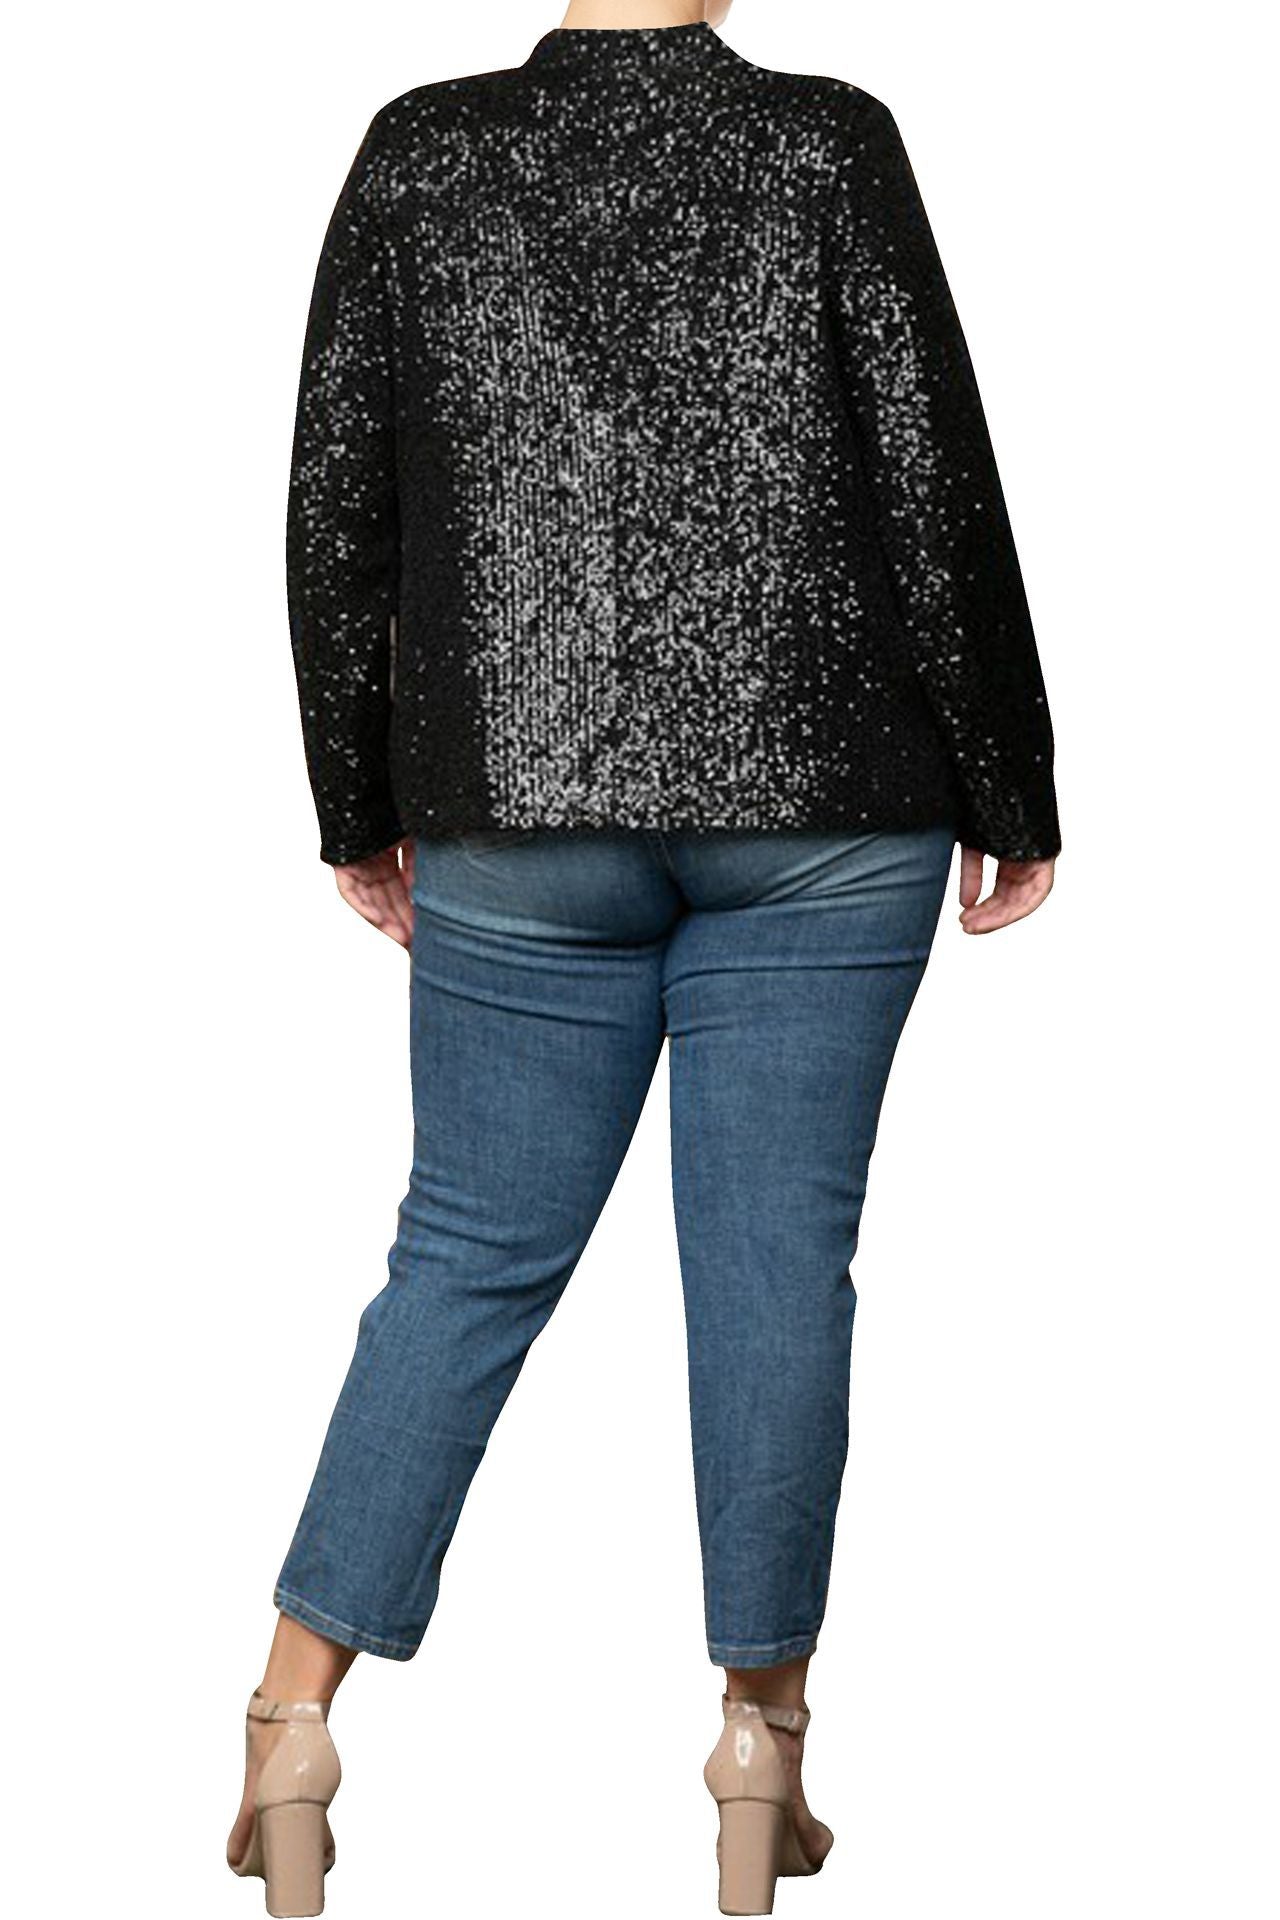 "Kyle X Shahida" "sequins jacket women's" "black sequin plus size jacket" "sequin jacket blazer" "black sequin womens jacket"